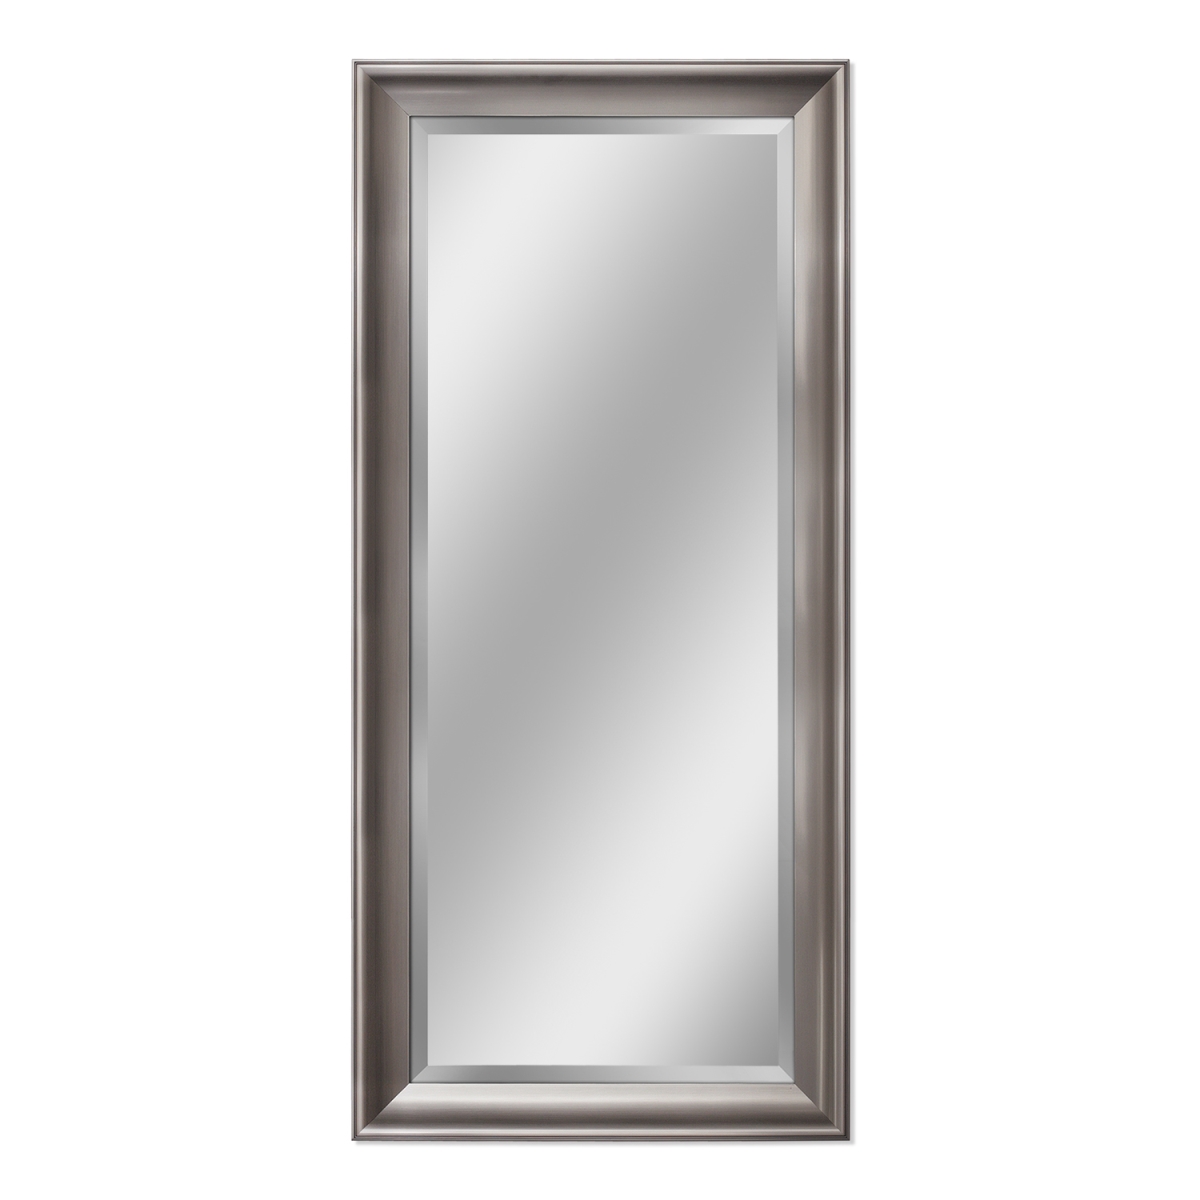 8171 30 X 64 In. Polystyrene Transitional Brush Nickel Frame Leaner Mirror